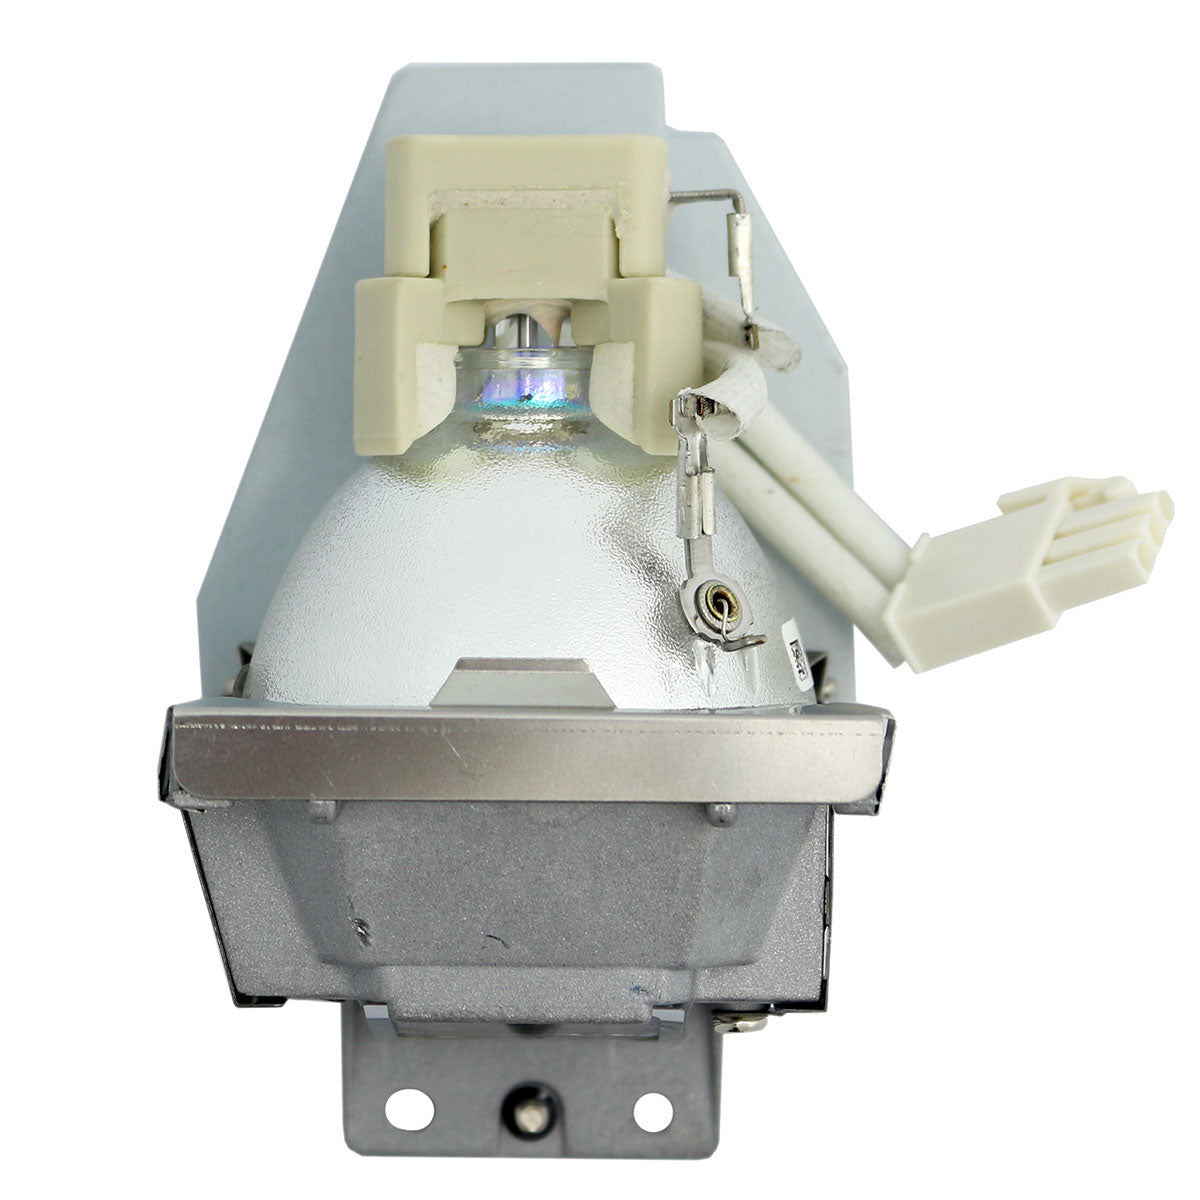 BenQ 5J.Y1405.001 Osram Projector Lamp Module